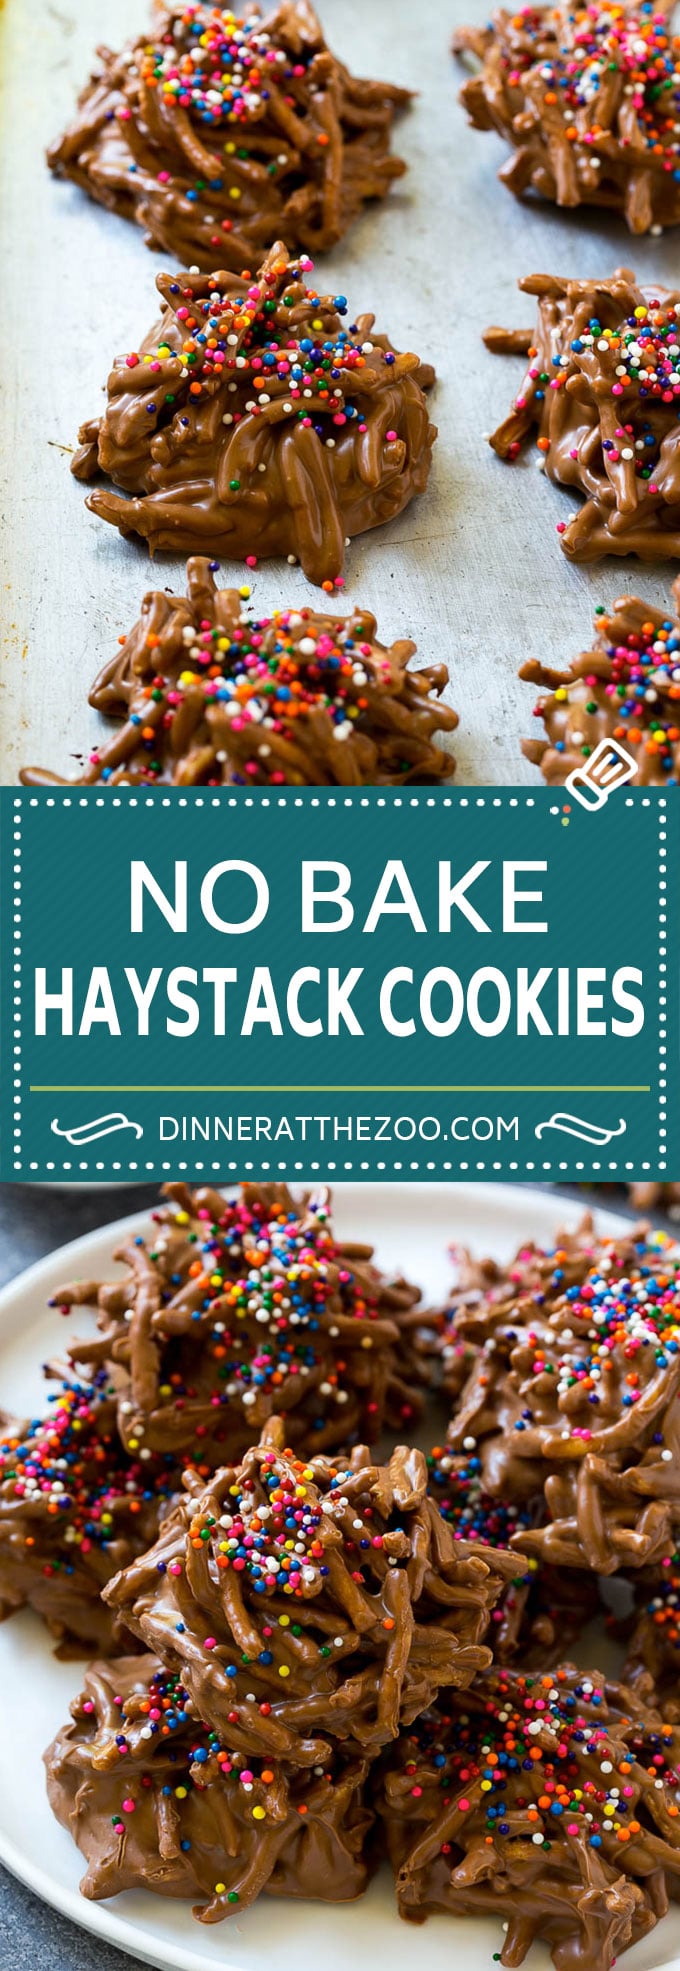 Haystack Cookies Recipe | No Bake Cookies | Chow Mein Noodle Cookies #nobakecookies #cookies #recipe #chocolate #dinneratthezoo